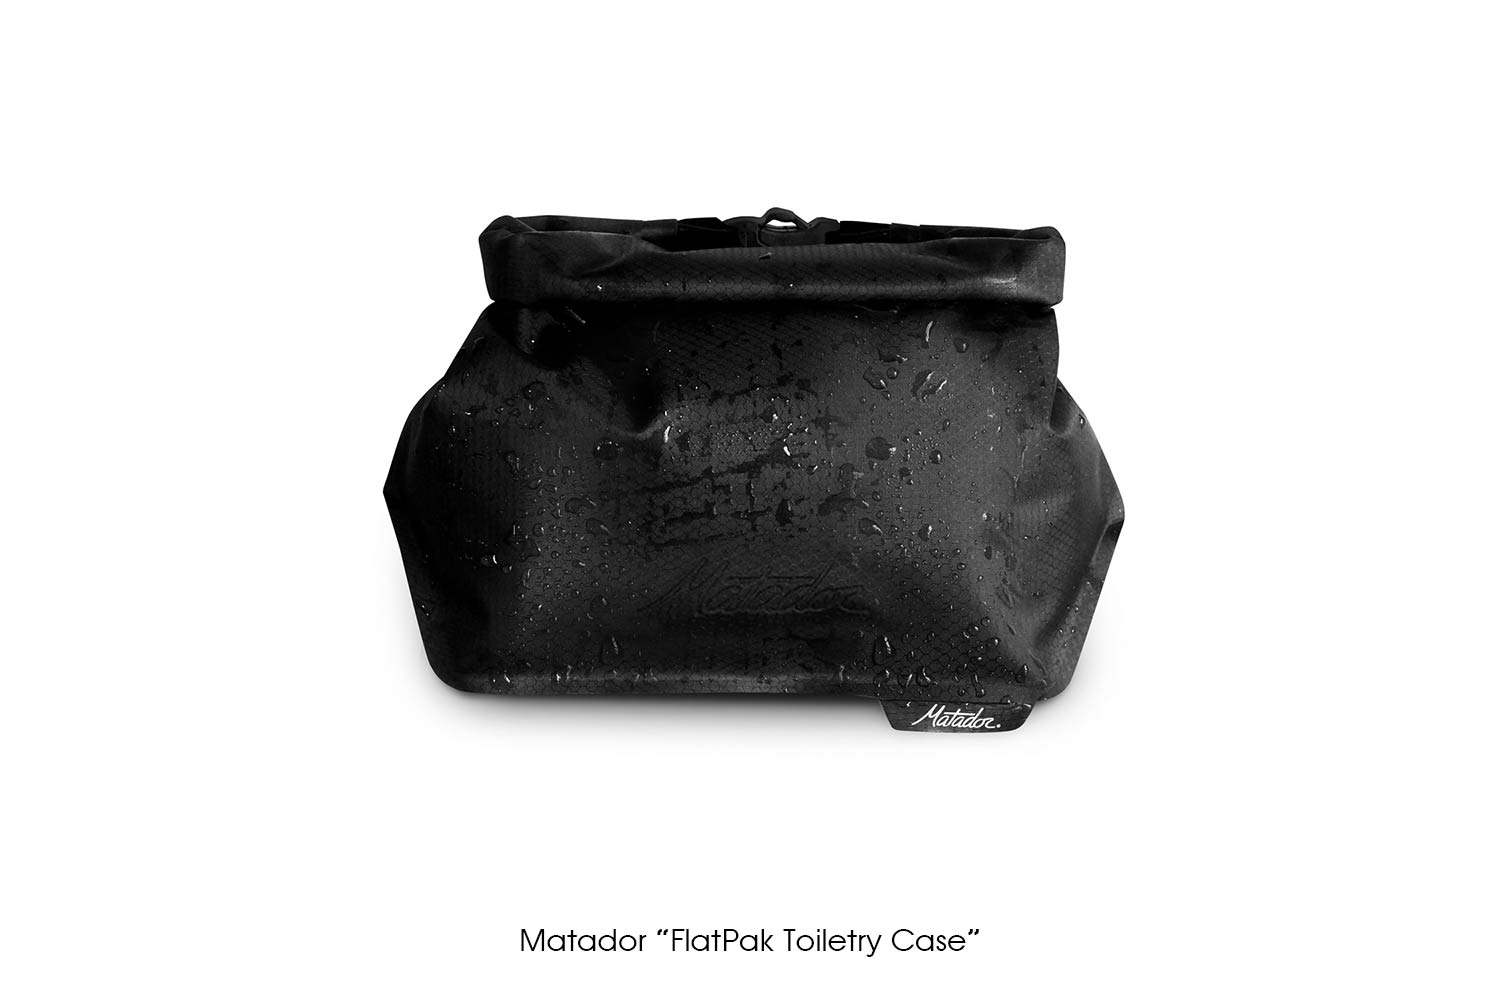 Matador "FlatPak Toiletry Case"